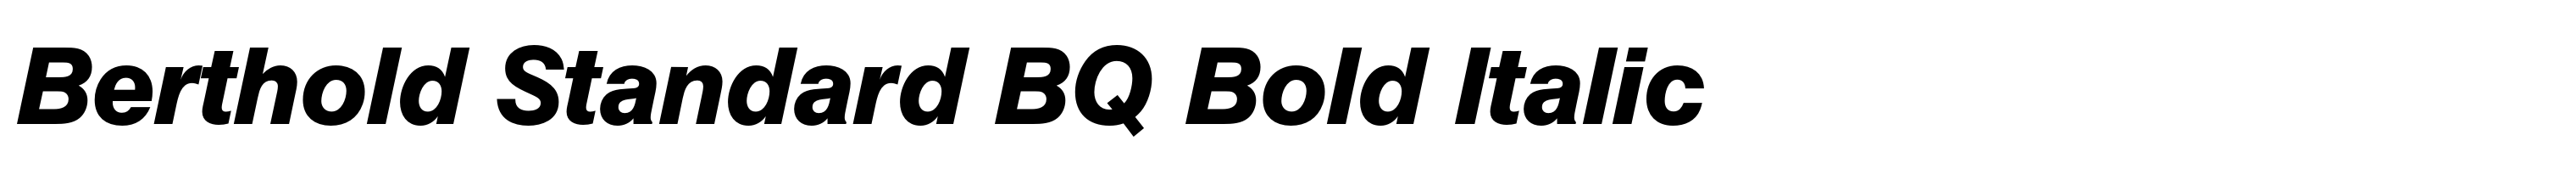 Berthold Standard BQ Bold Italic